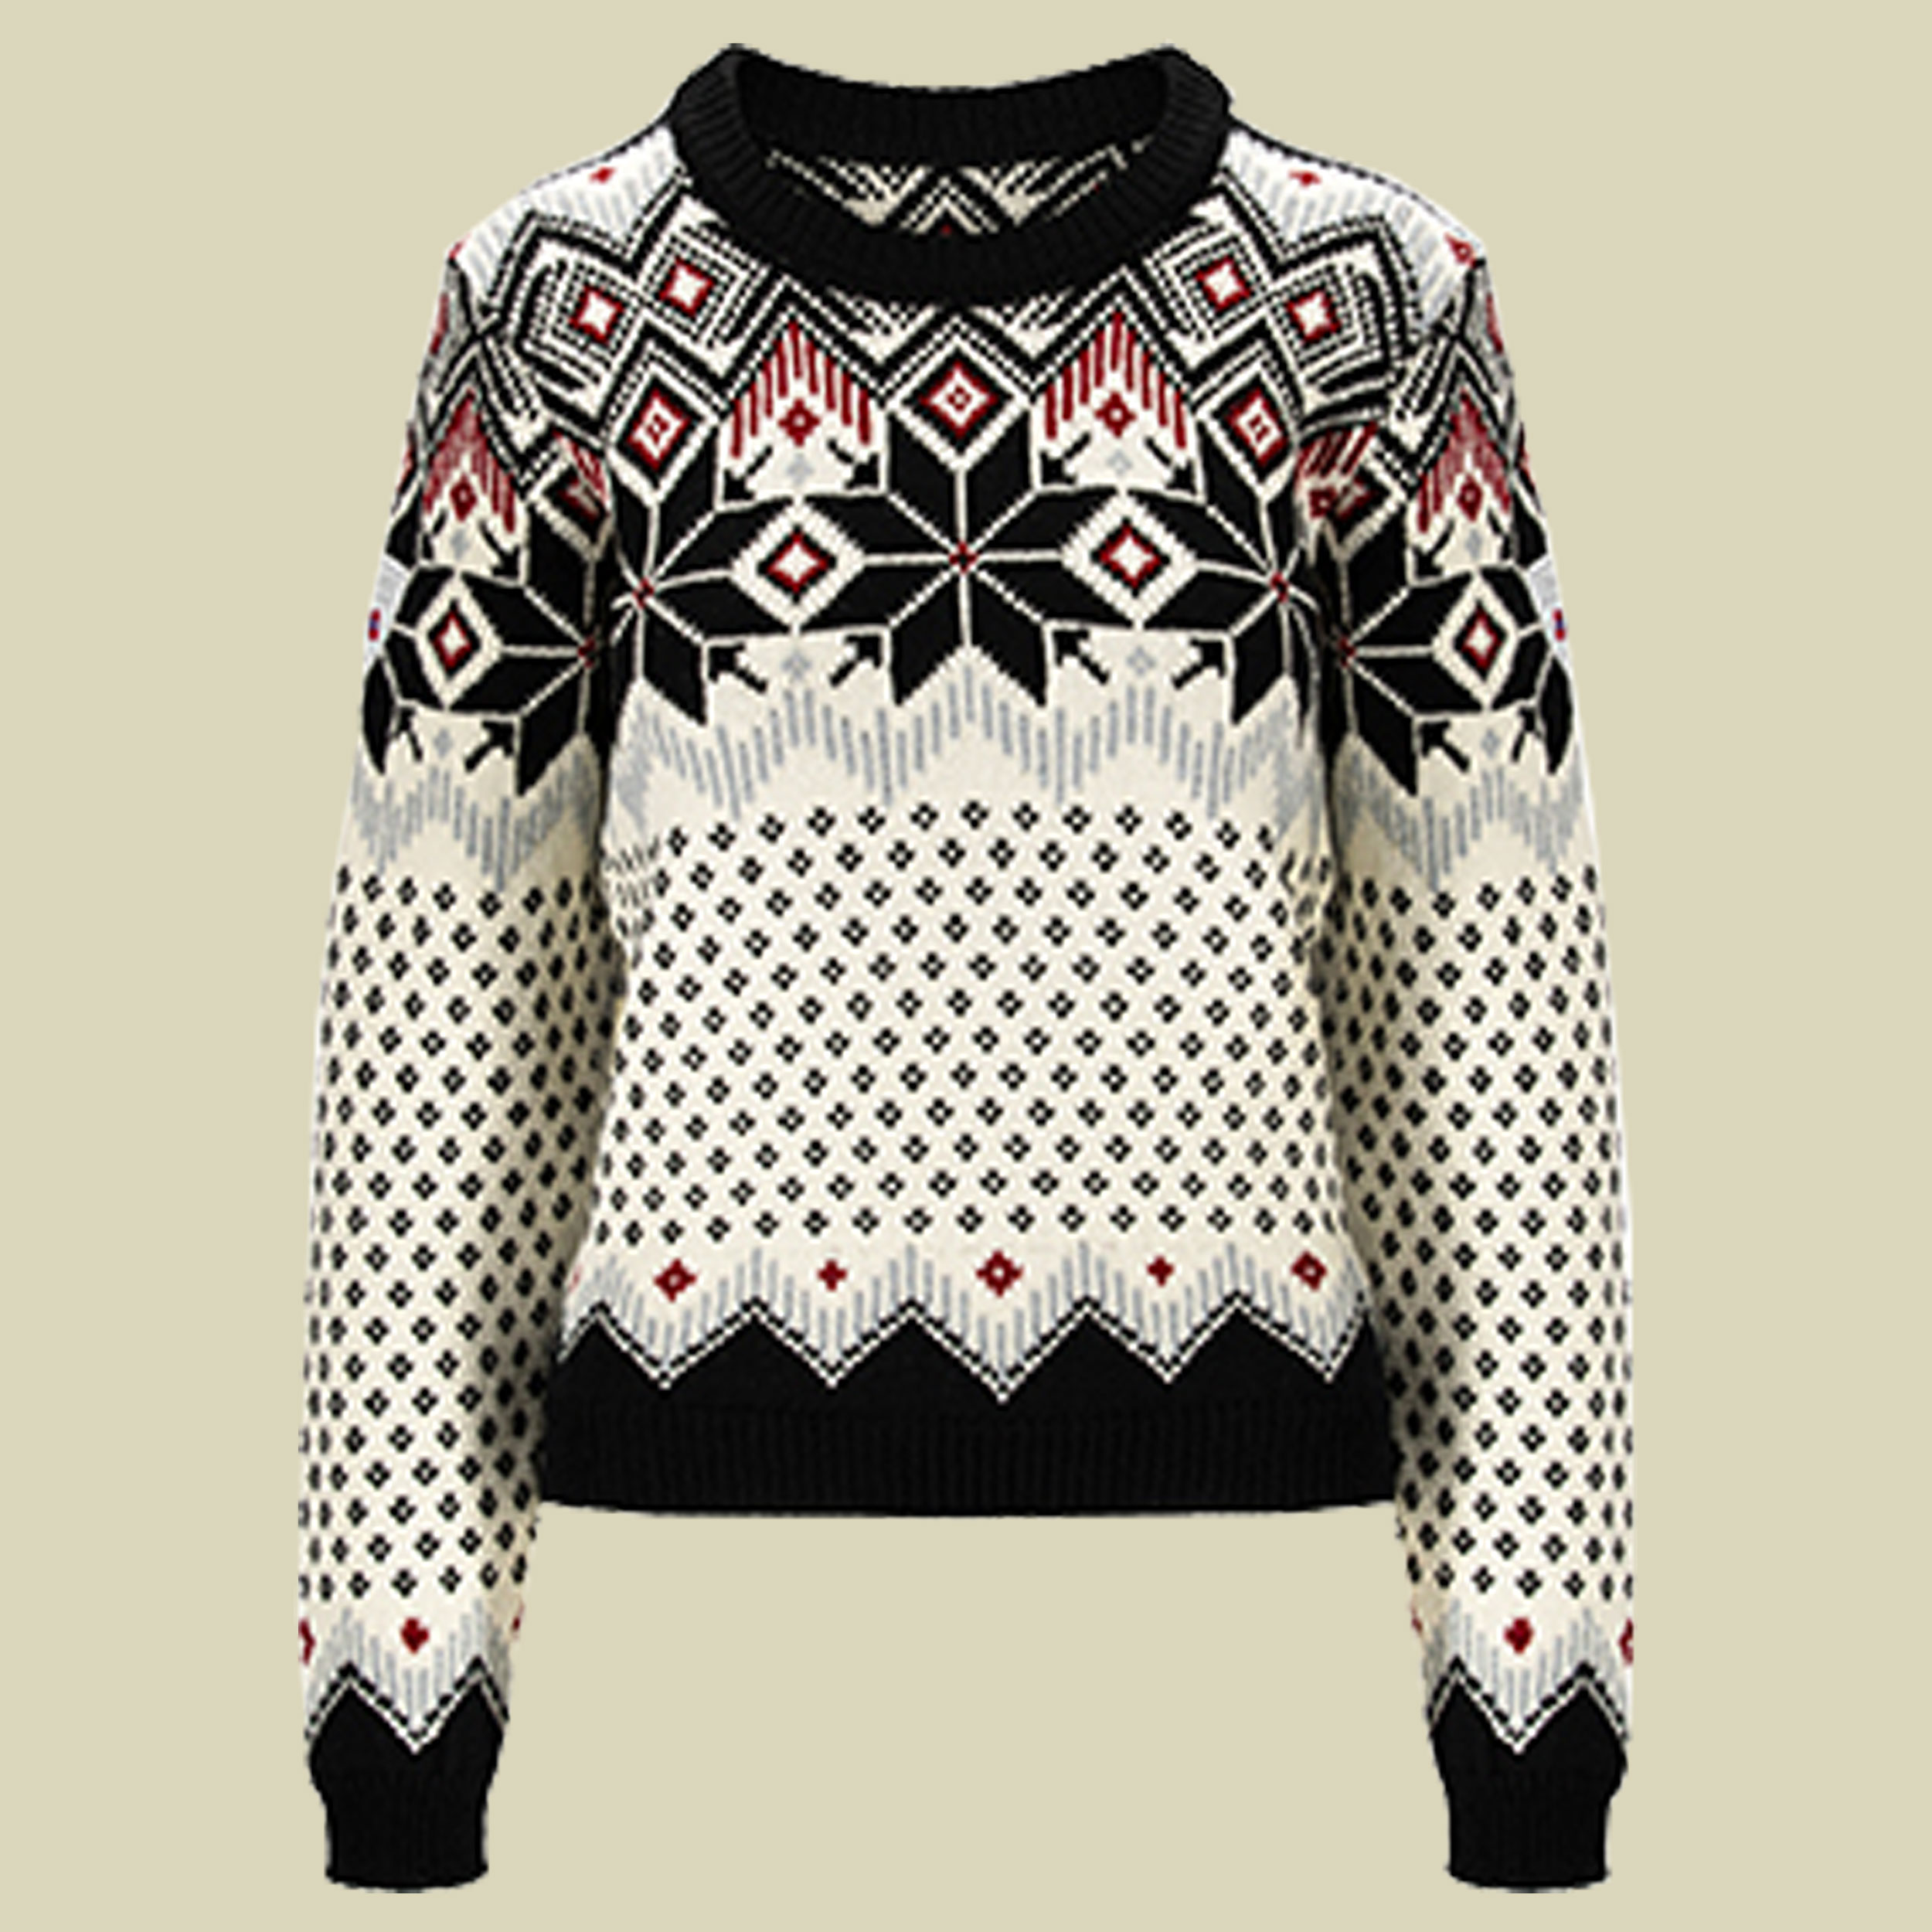 Vilja Sweater Women Größe S Farbe black/off white/red rose